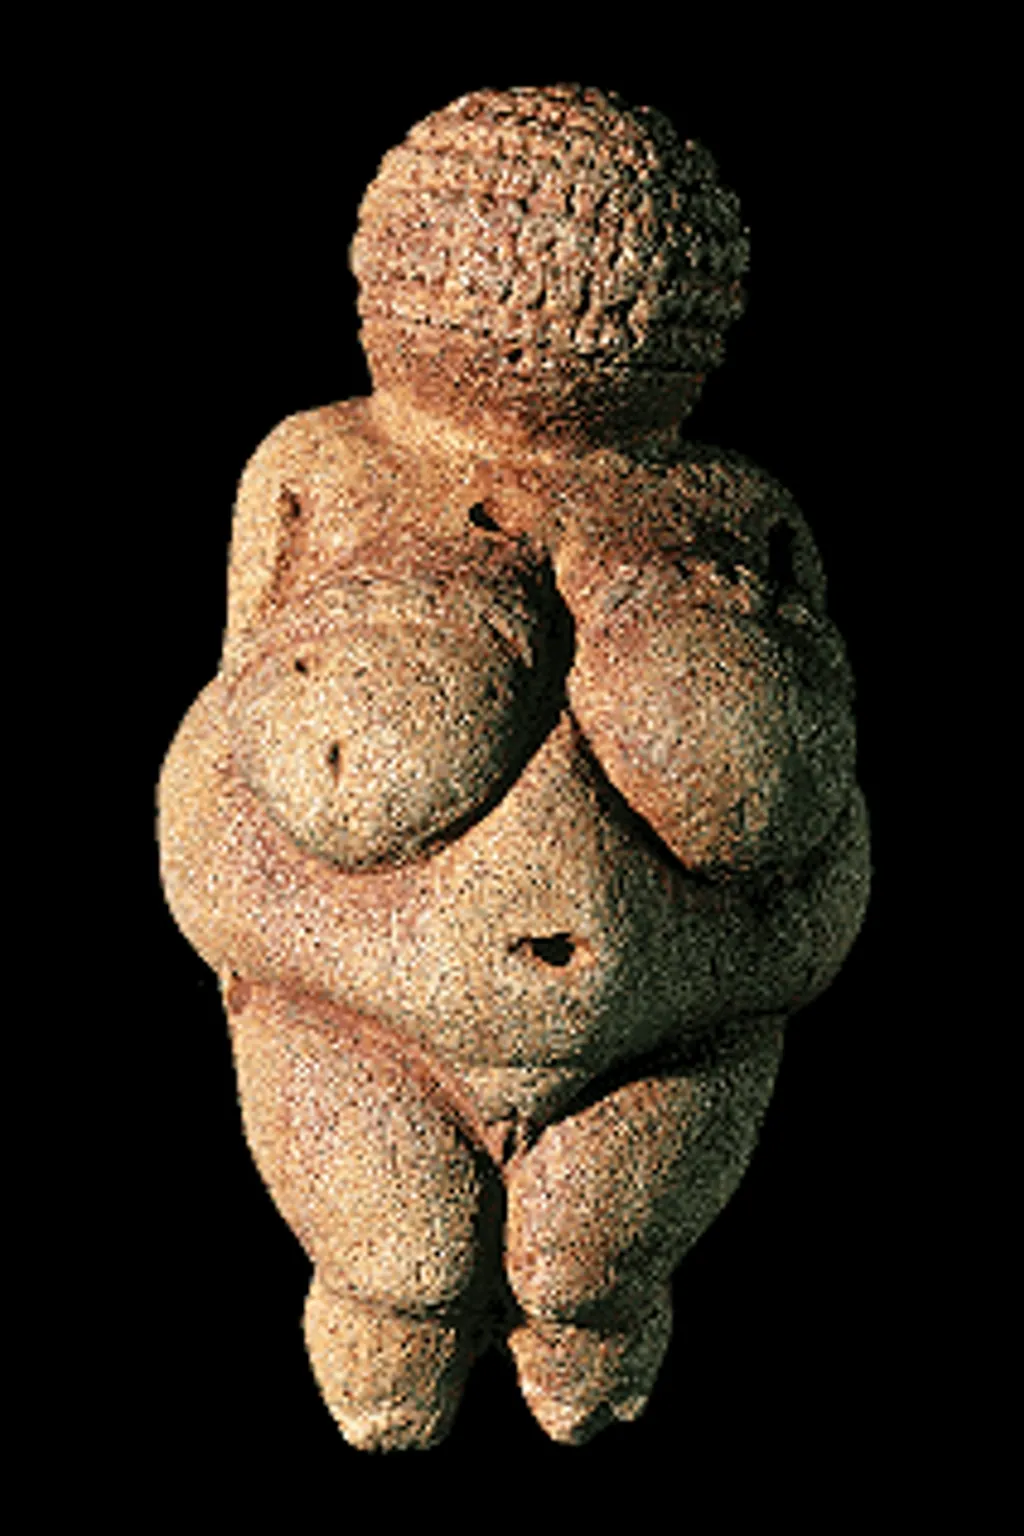 Nina Paley
őskori szobor 
Willendorfi vénusz 